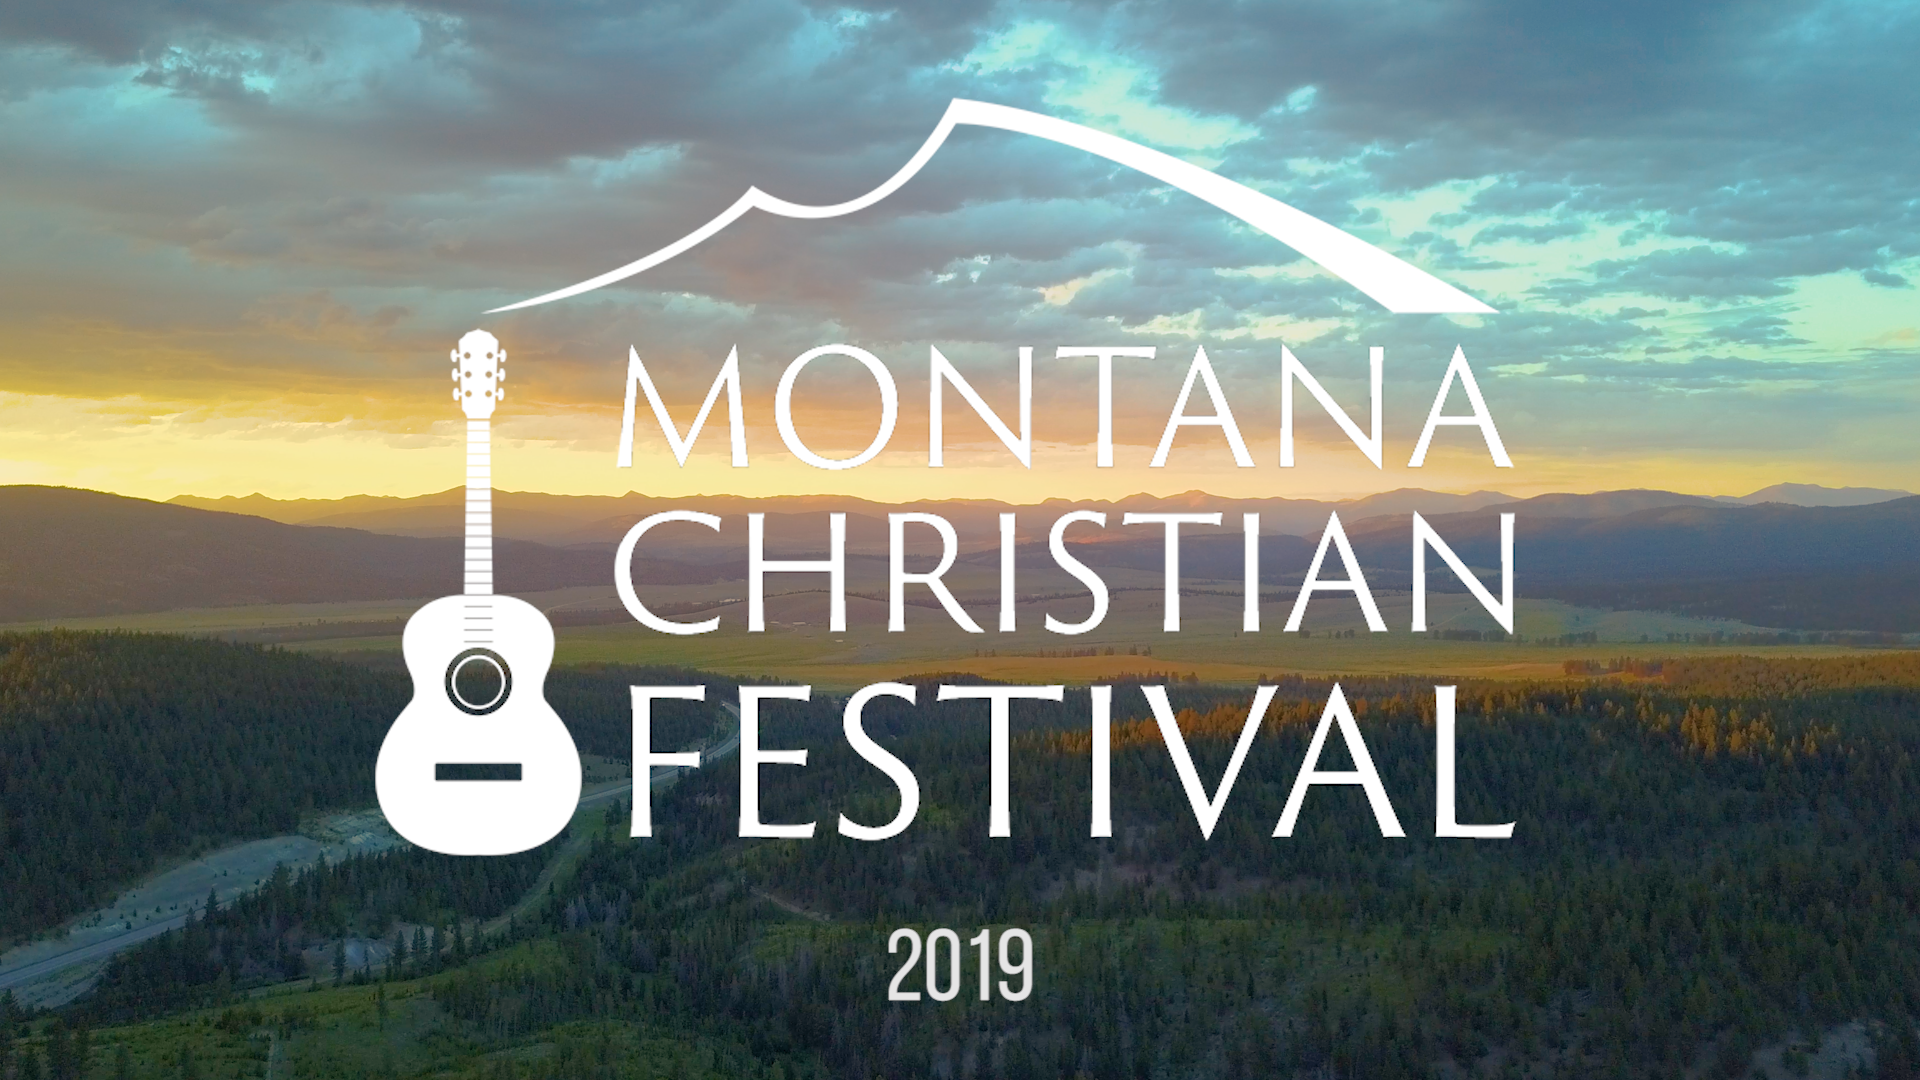 Montana Christian Festival Video Series